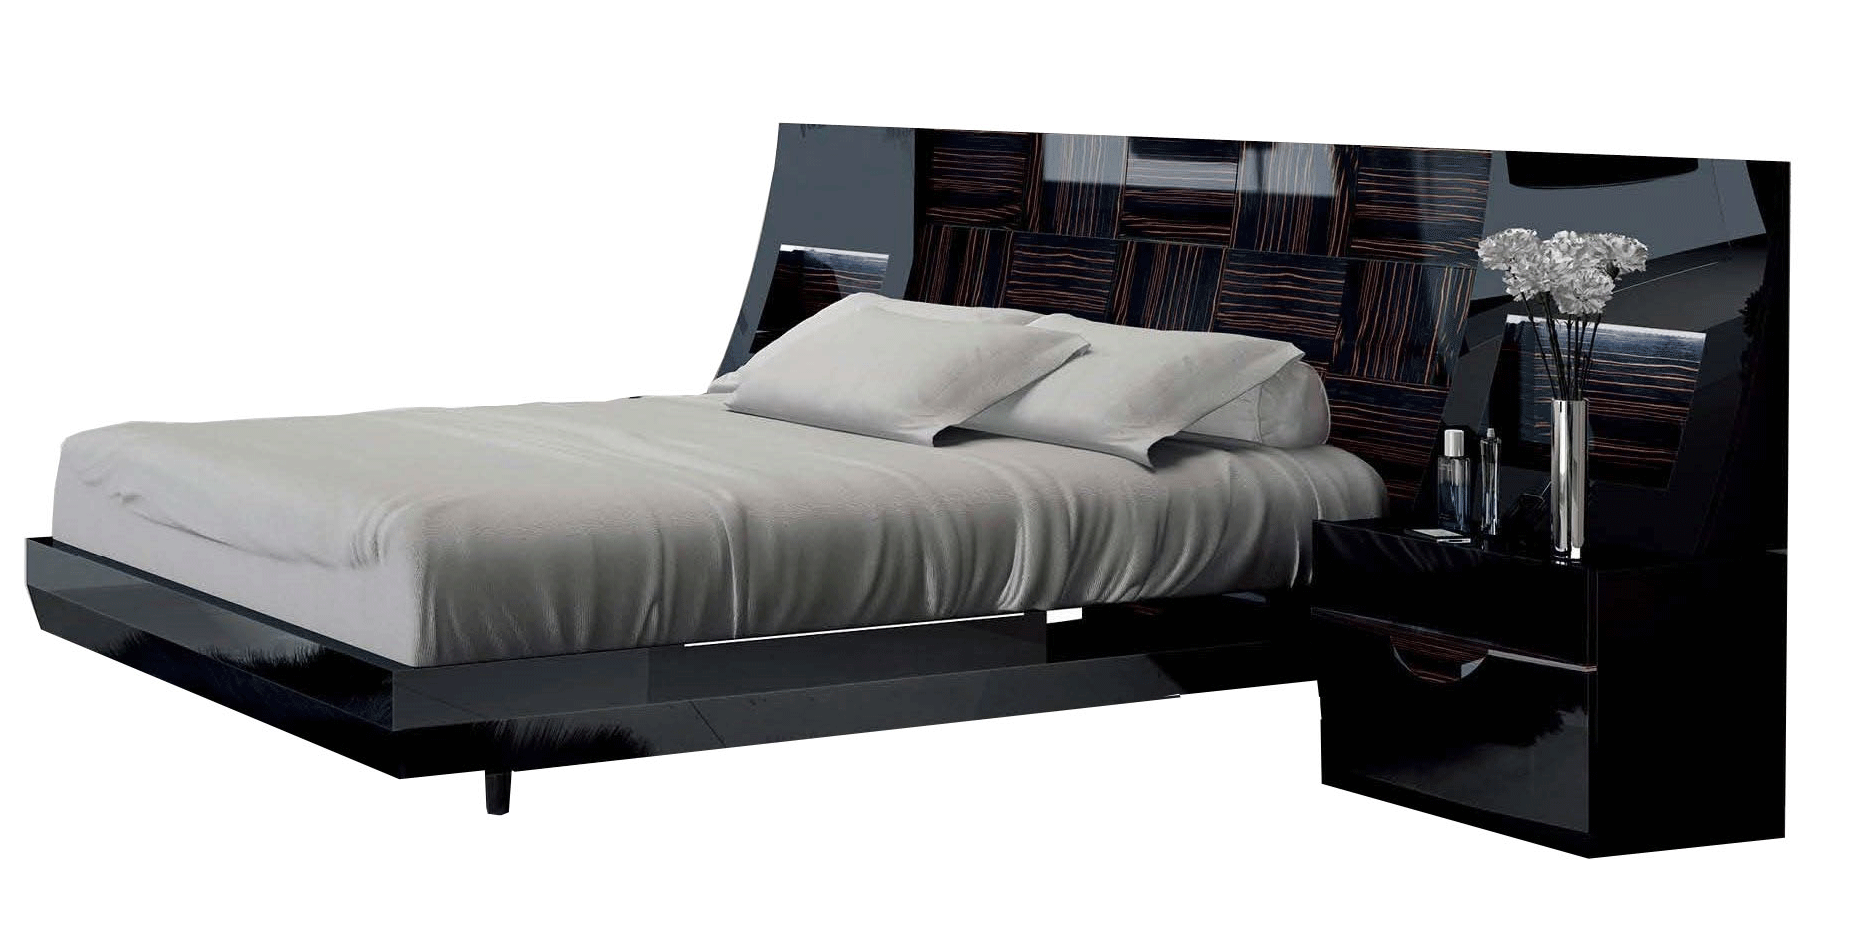 Bedroom Furniture Nightstands Marbella Bed QS bed ONLY